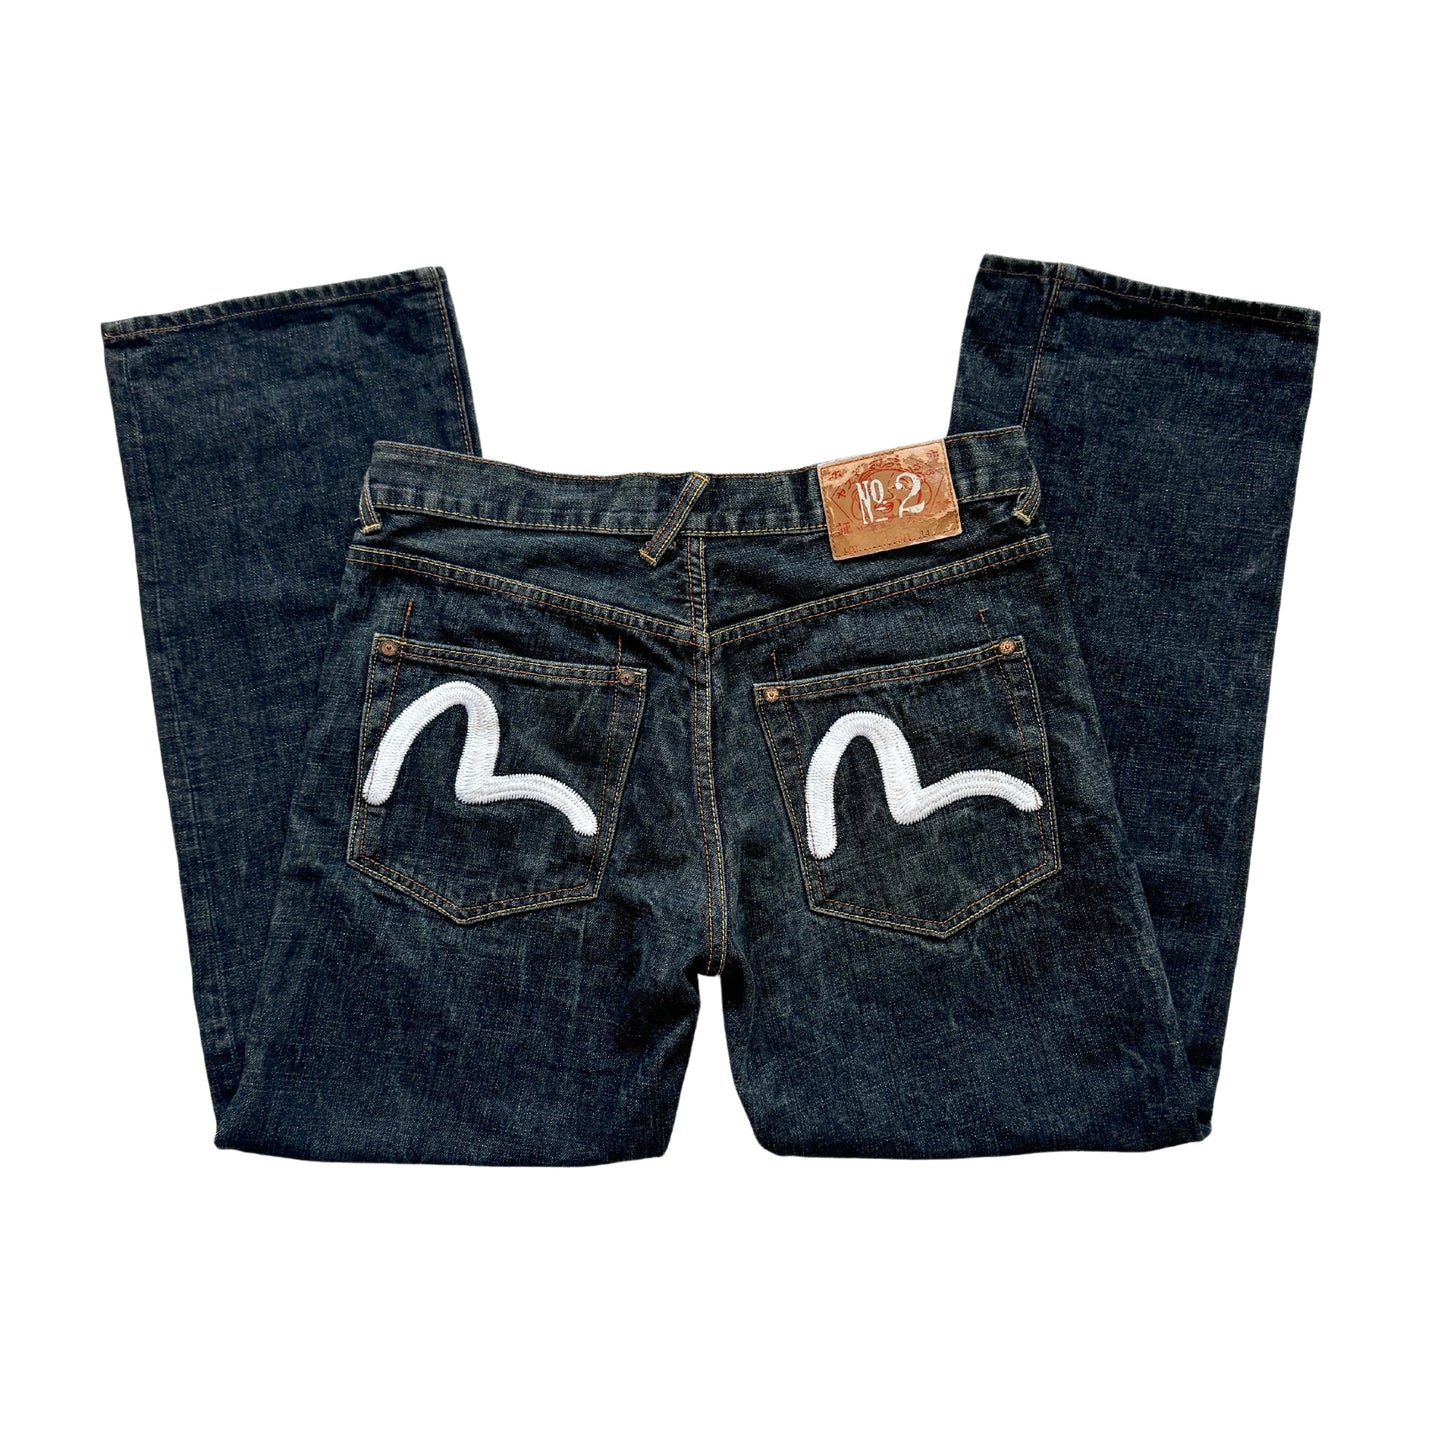 Vintage 2000s Y2k Evisu No. 2 Straight Fit Denim Jeans